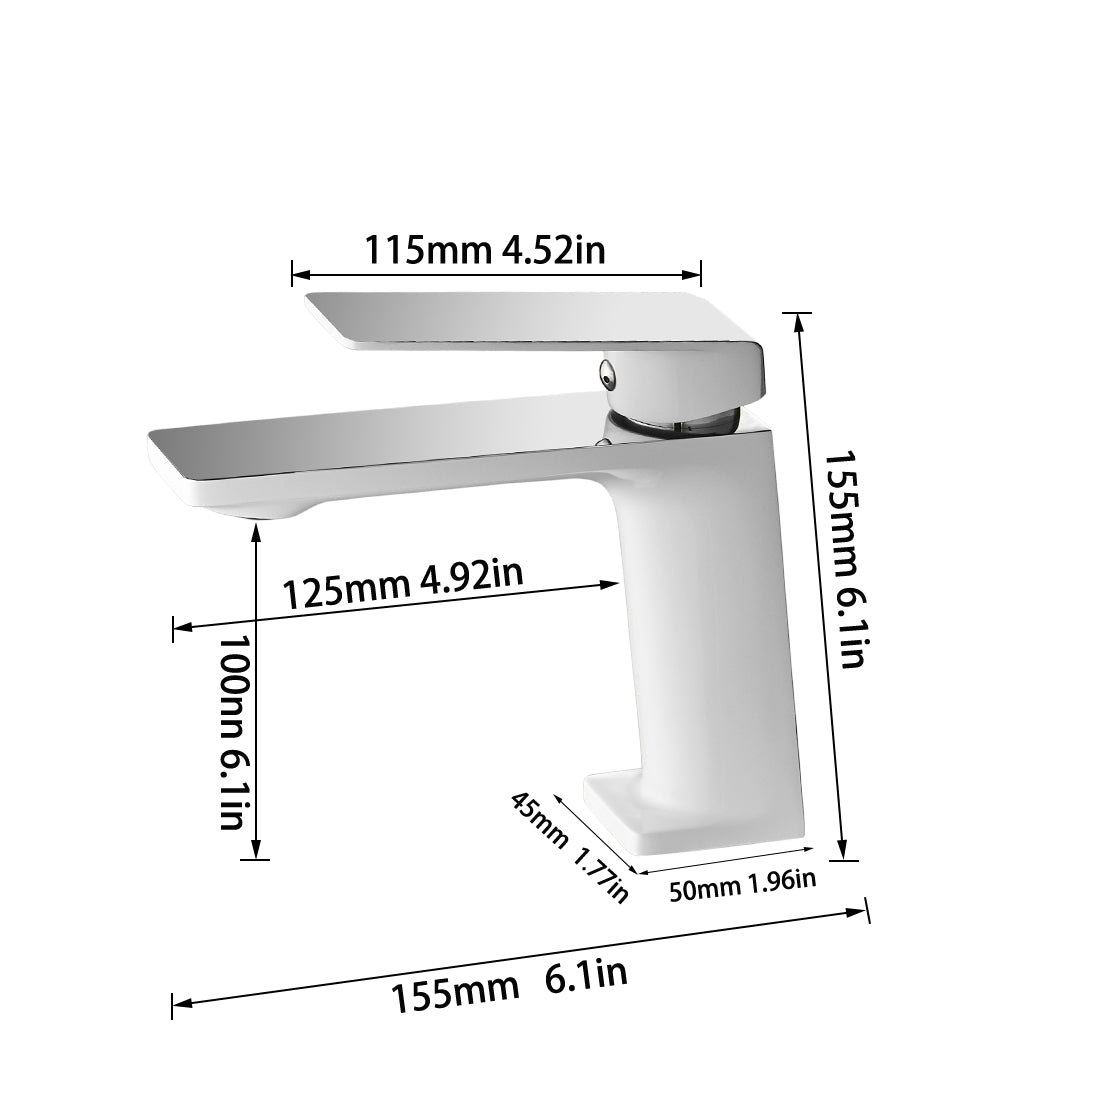 Single Handle Bathroom Faucet ORB Brushed Nickle Gold Centerset Brass Bathroom Sink Faucet